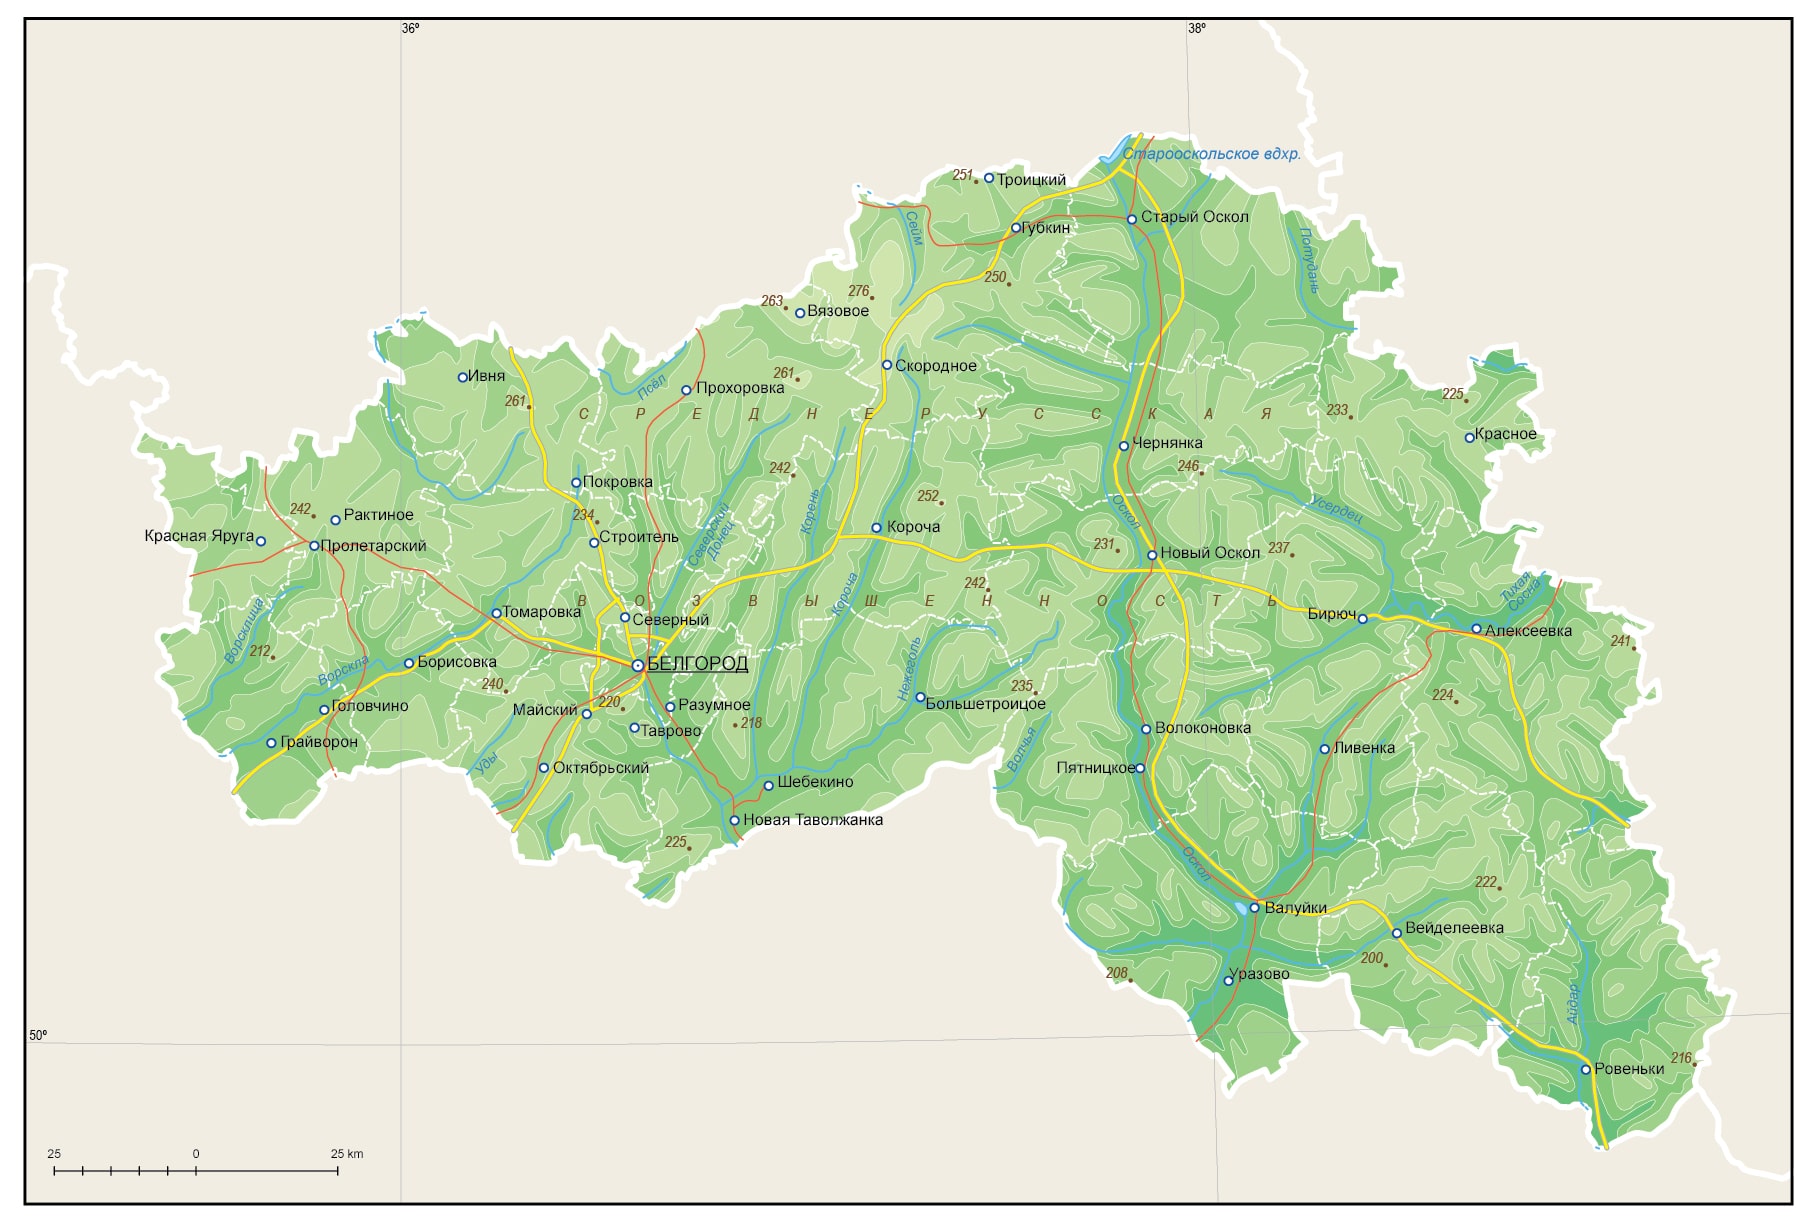 Головчино на карте белгородской области. Физическая карта Белгородской области масштаб.